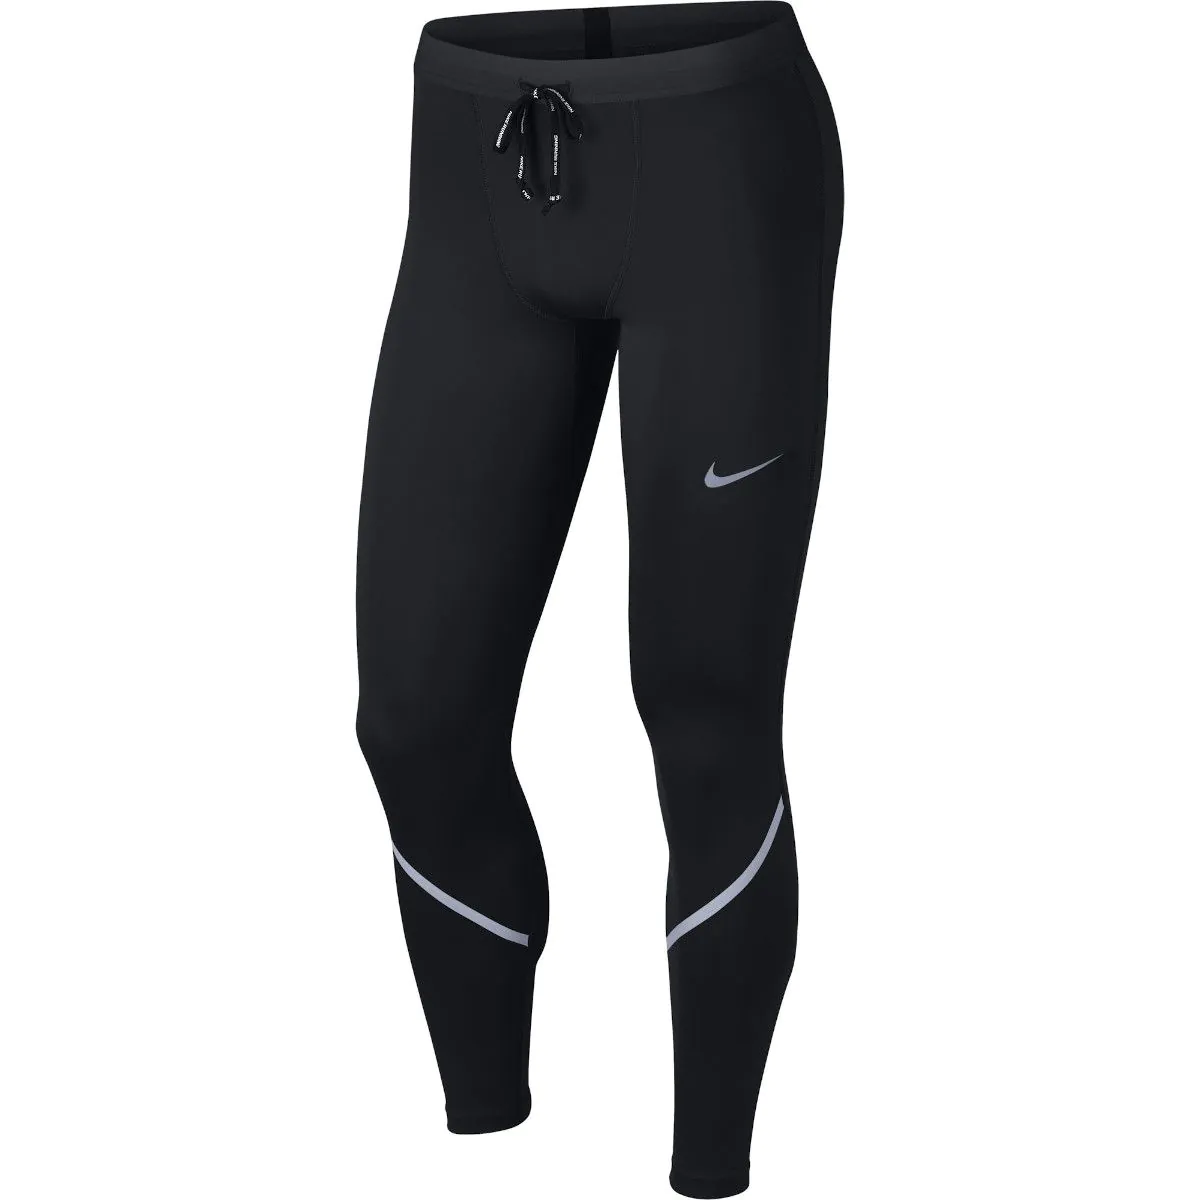  Nike Power Tech Men's Running Tights CJ5371-010 Size